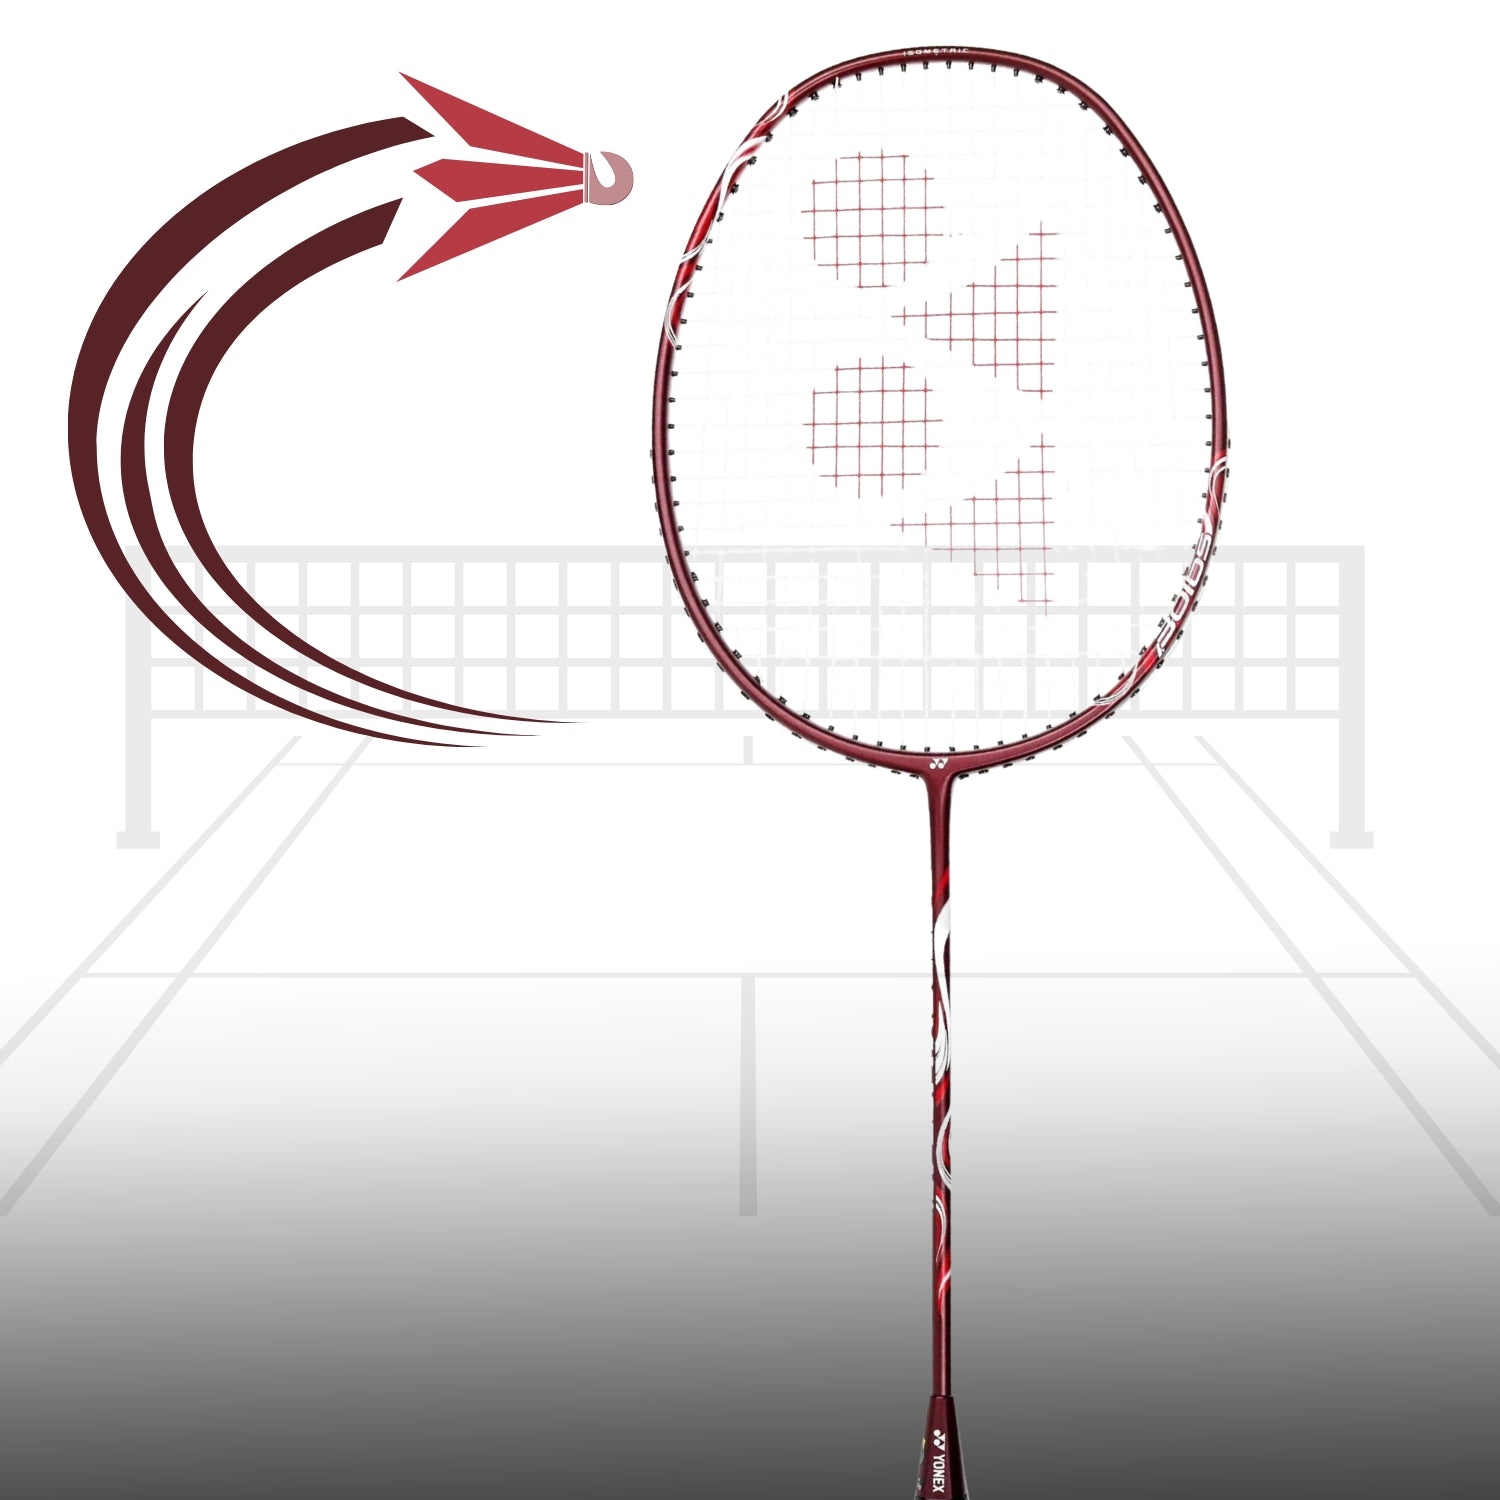 Yonex Astrox Lite 45I Strung Badminton Racquet, Kurenai - Best Price online Prokicksports.com